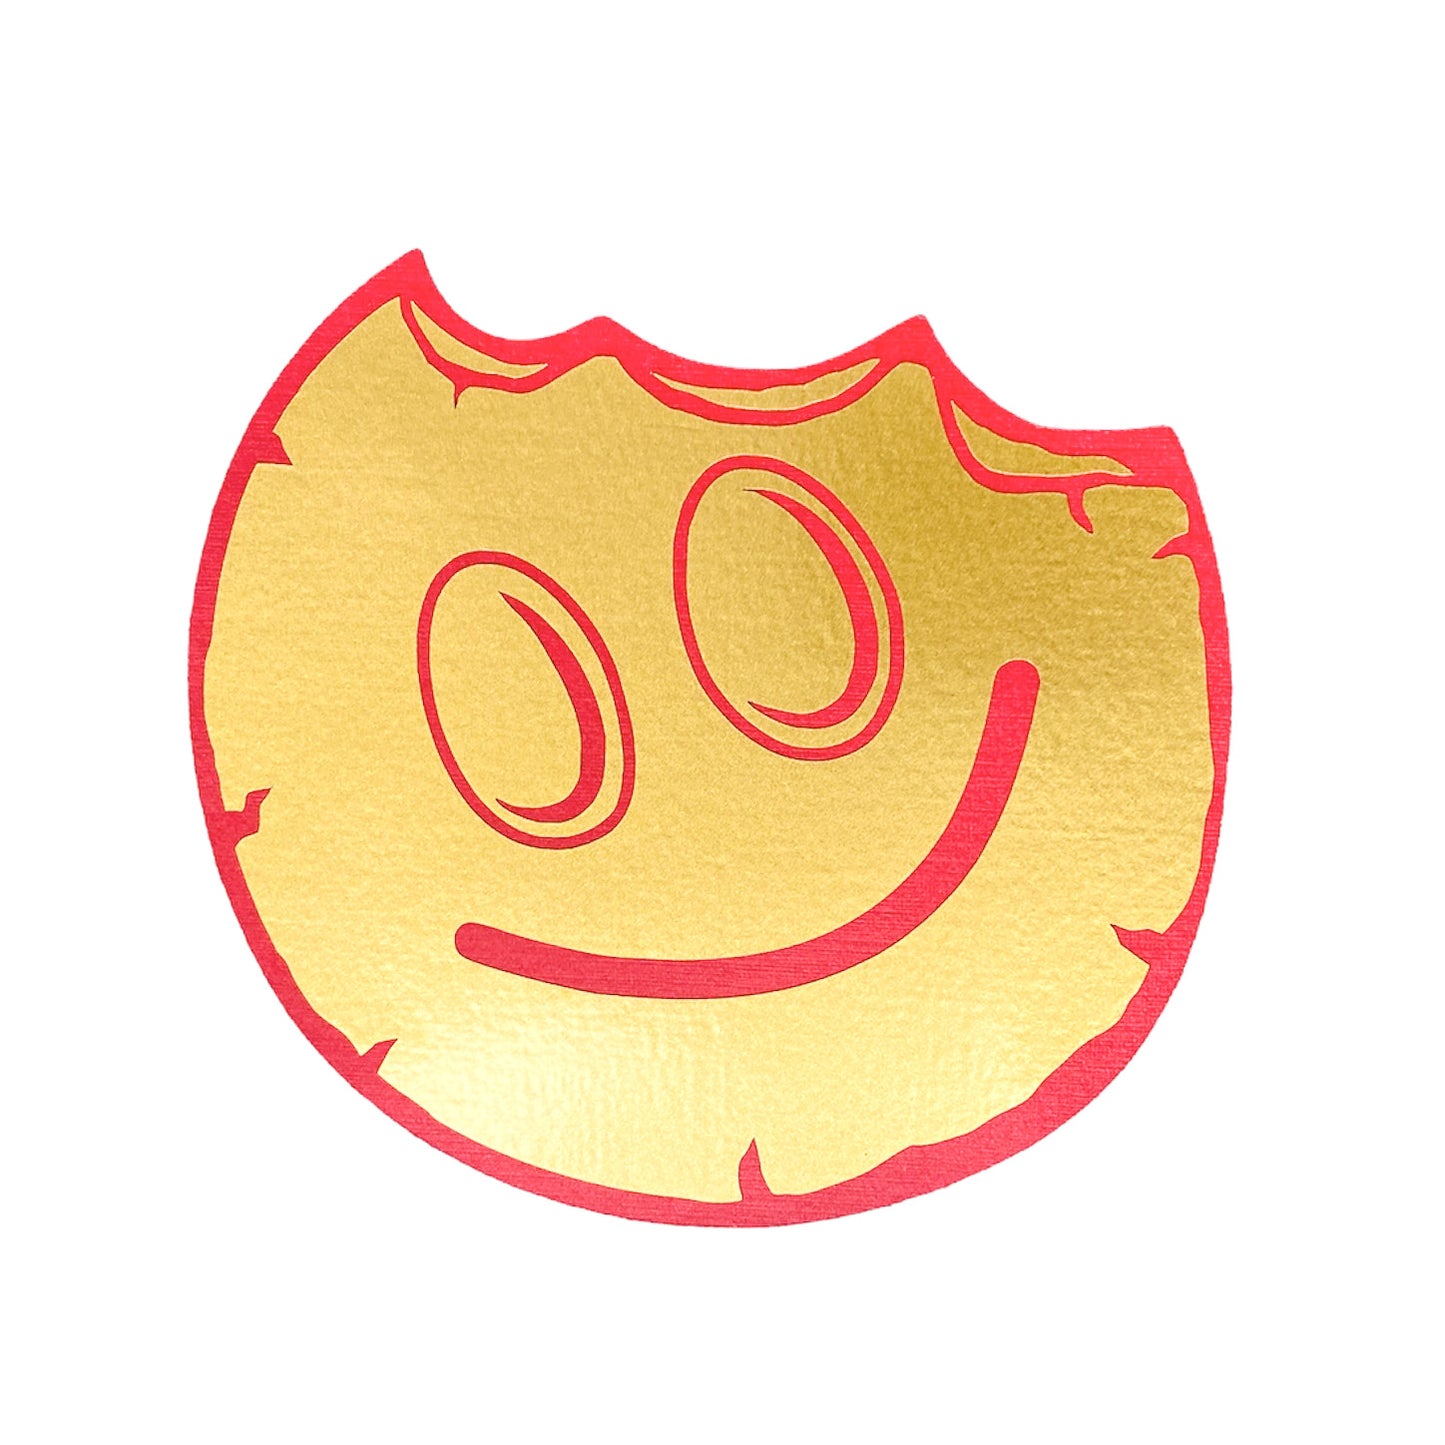 EEAAO Smiley Almond Cookie Red Envelope